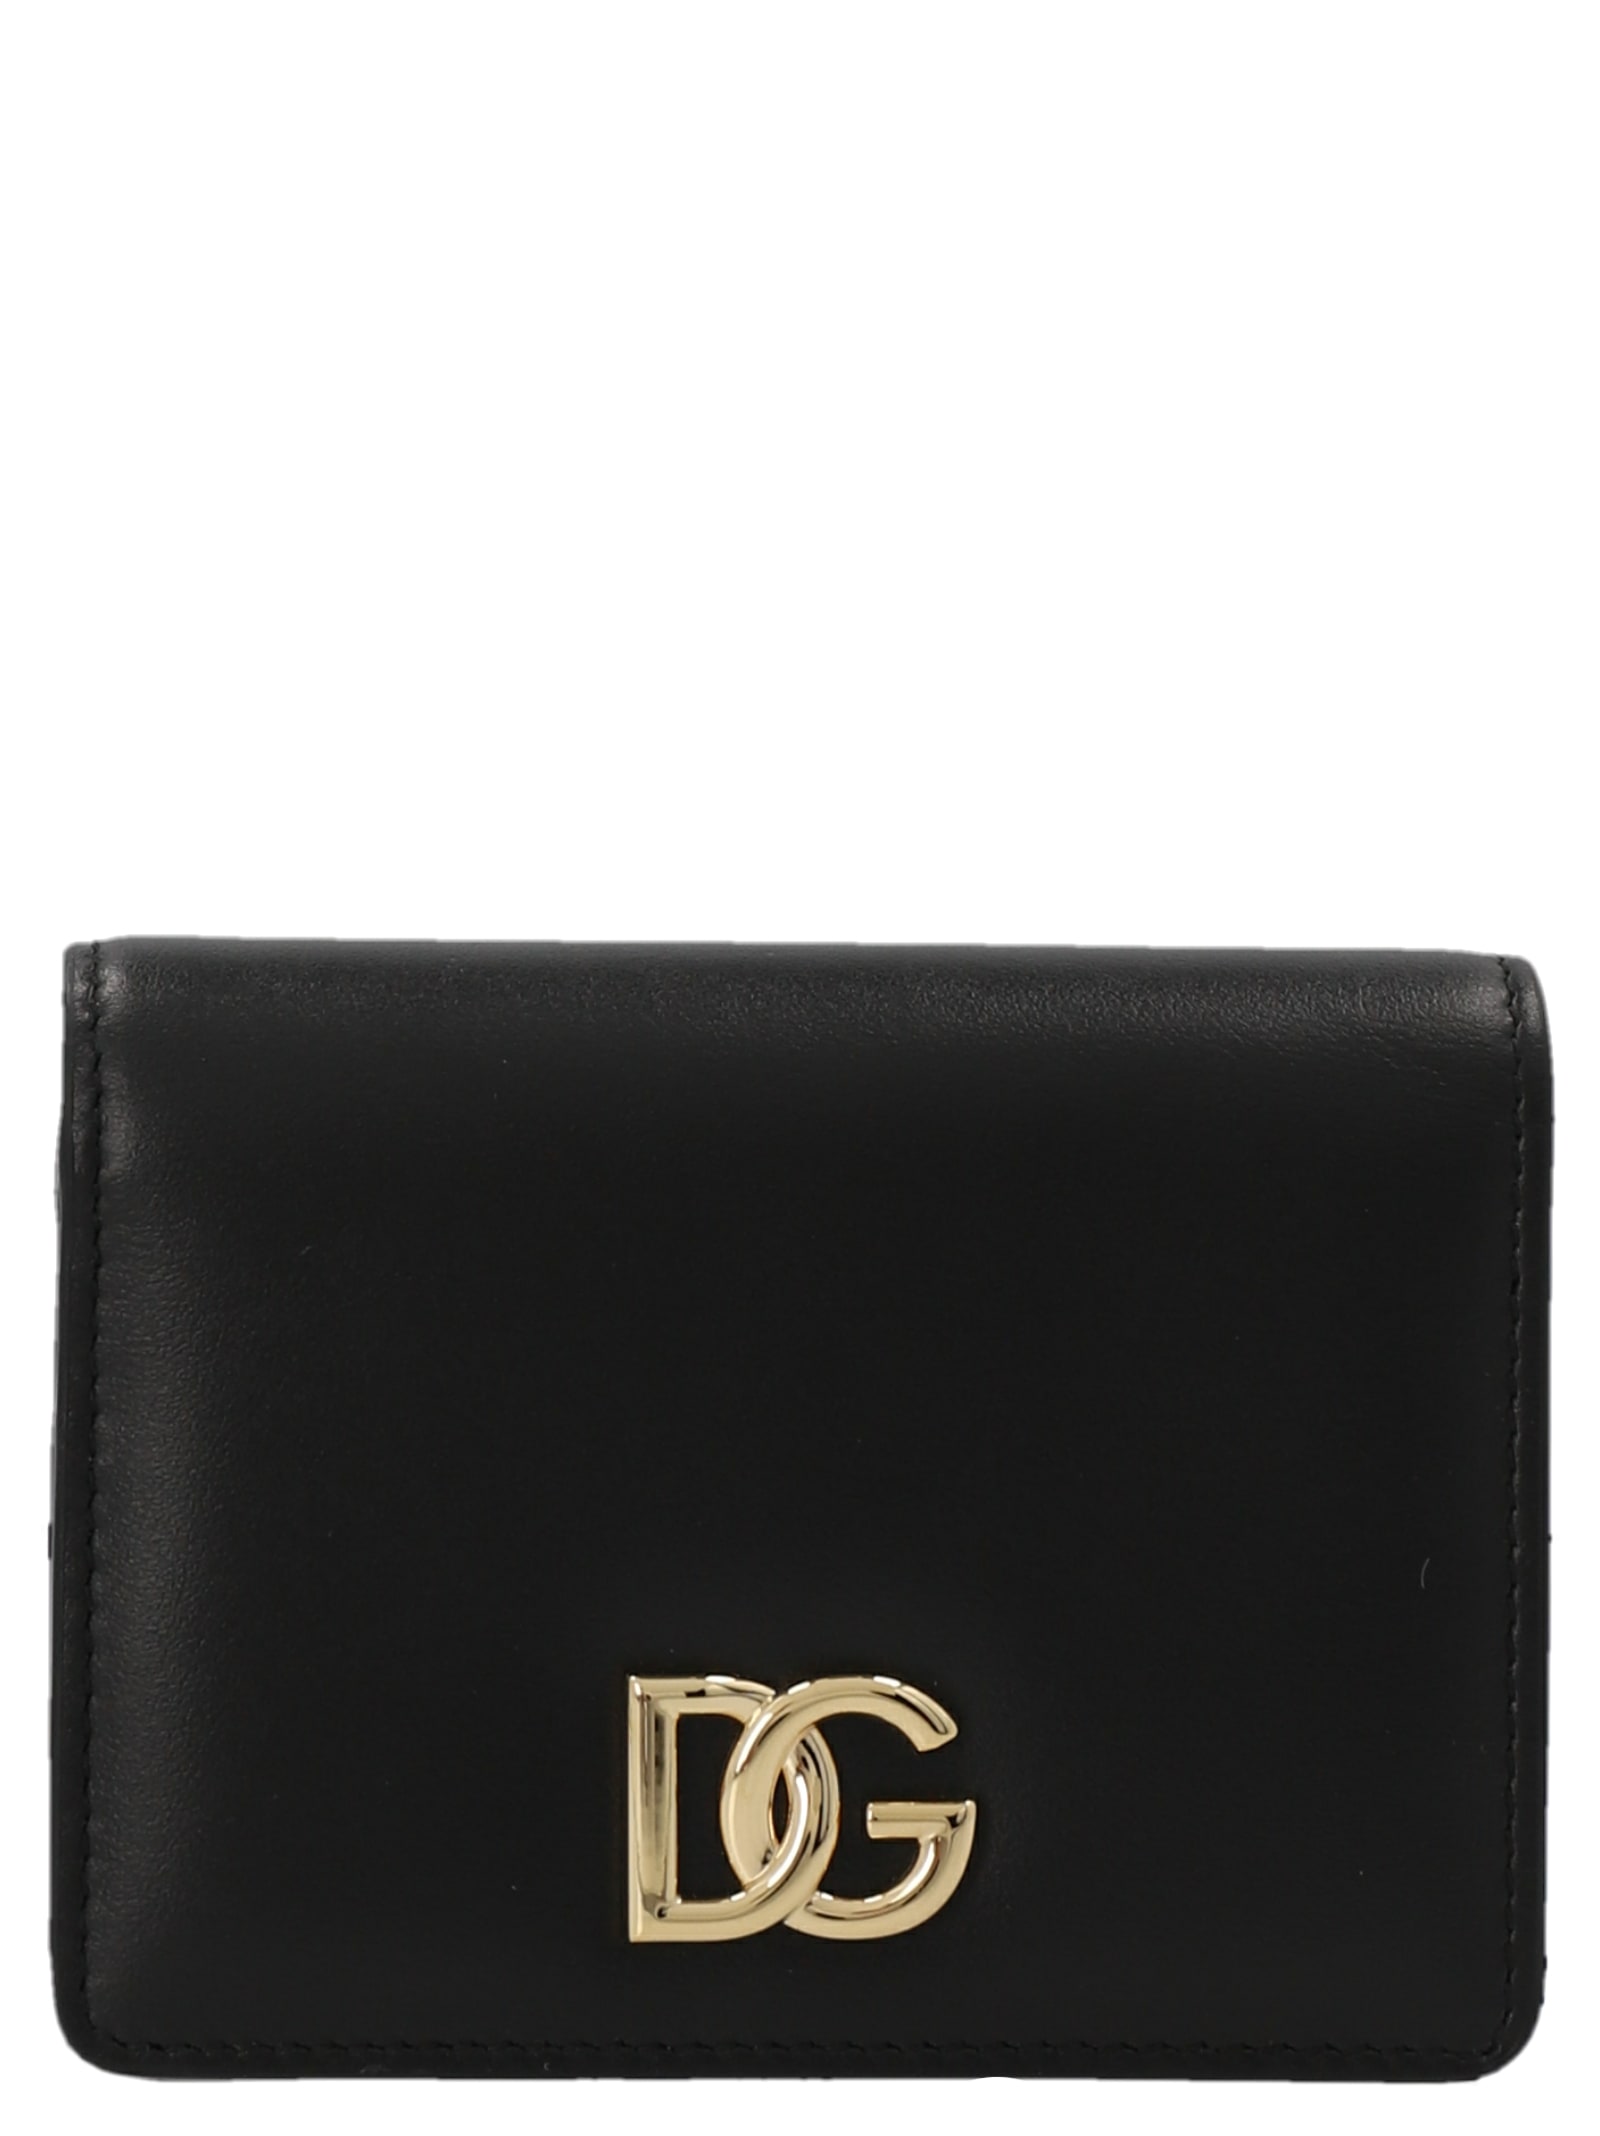 Dolce & Gabbana capri Wallet